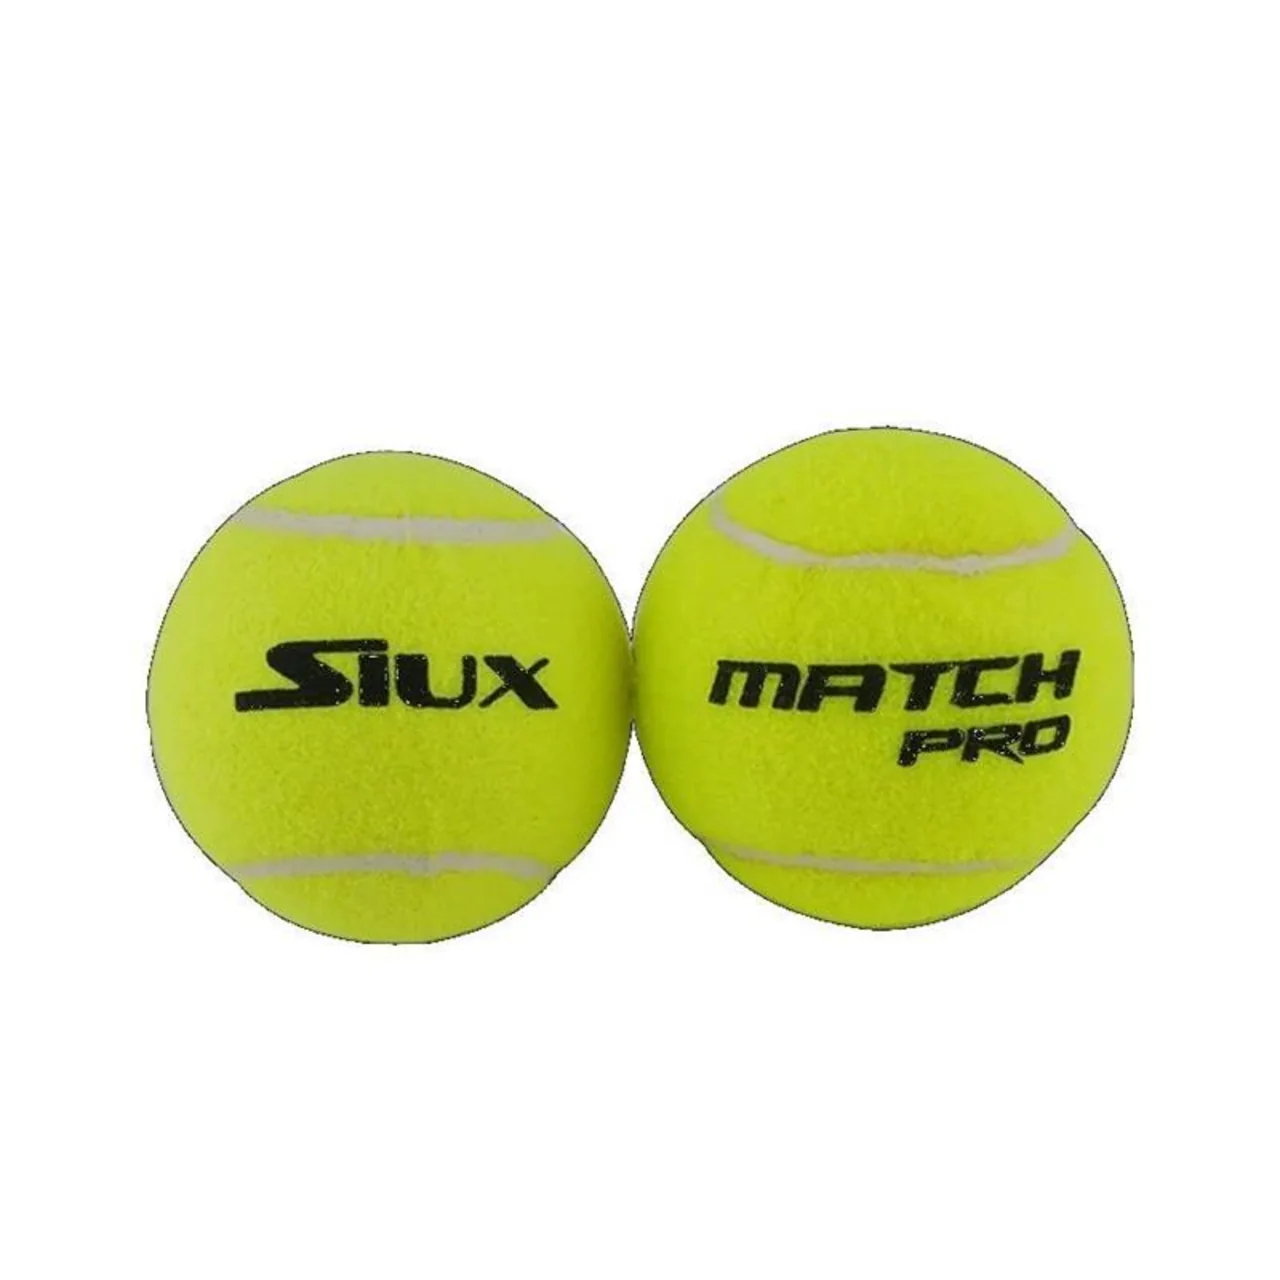 Siux Match Pro 24 tuubia